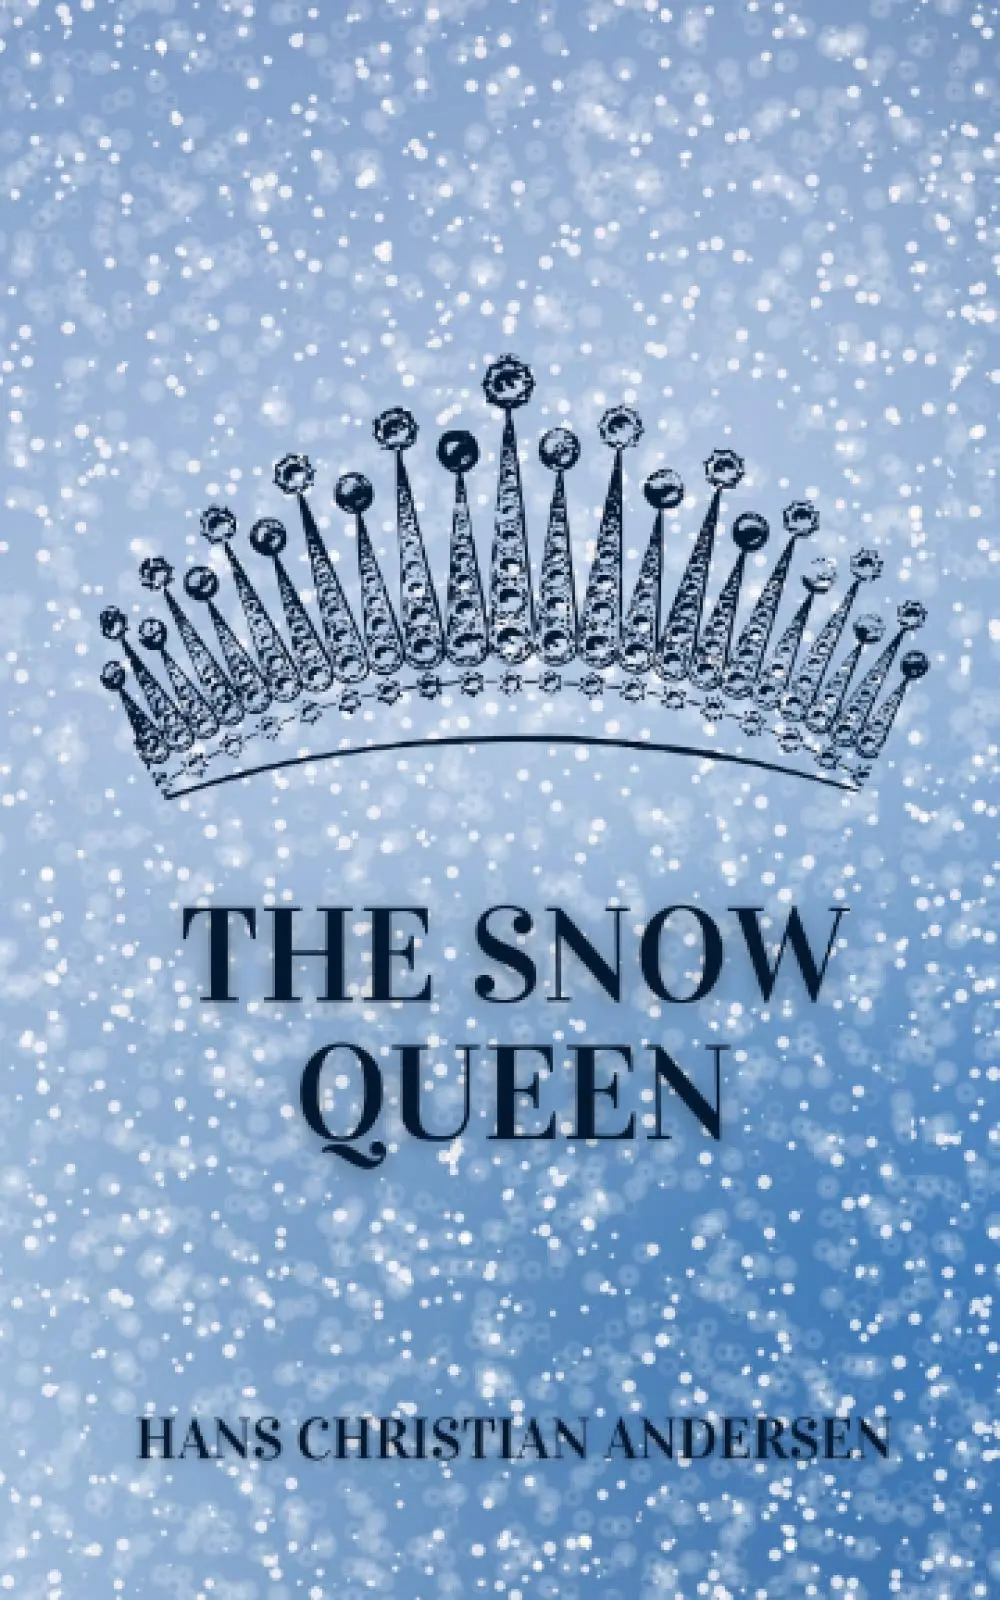 The Snow Queen, by Hans Christian Andersen